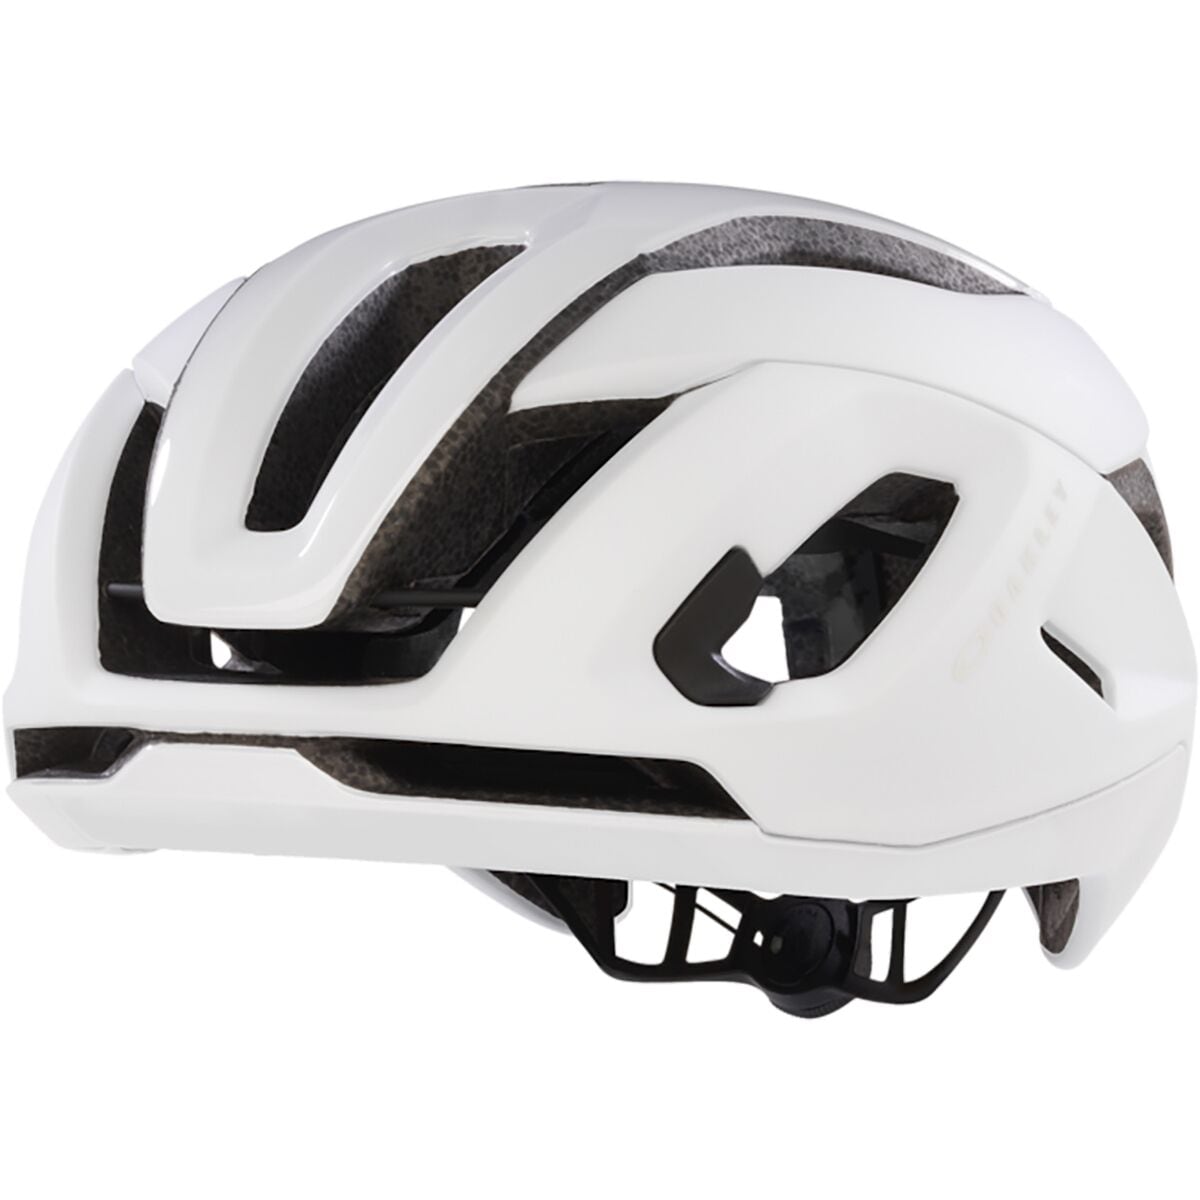 Oakley ARO5 aero road helmet review - Road Cycling Helmets Helmets BikeRadar